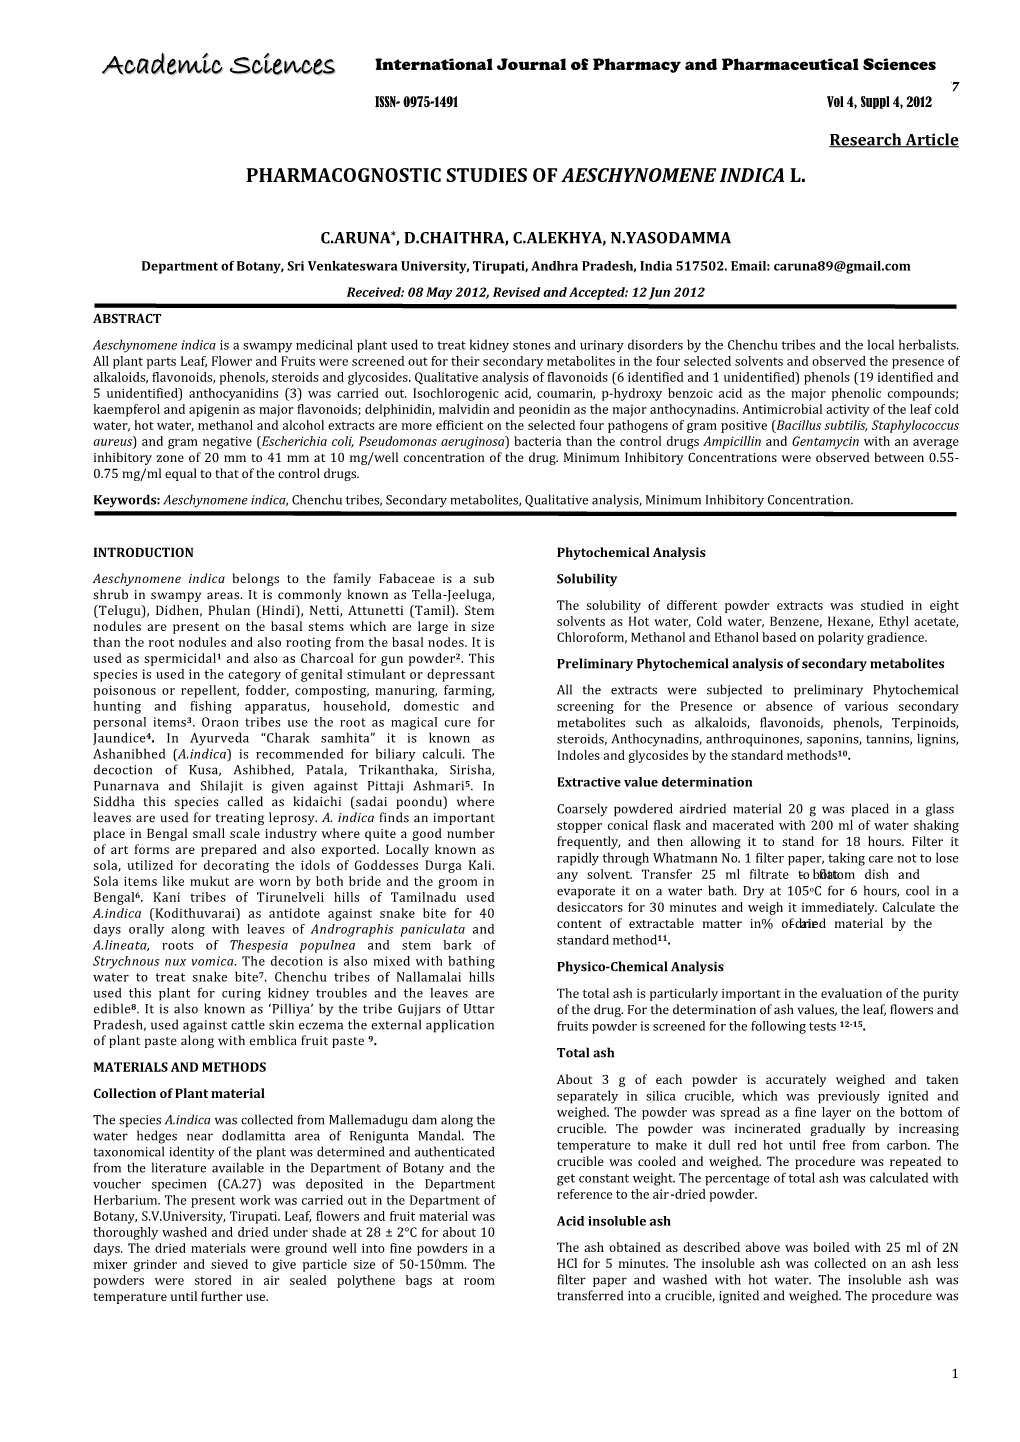 Pharmacognostic Studies of Aeschynomene Indica L